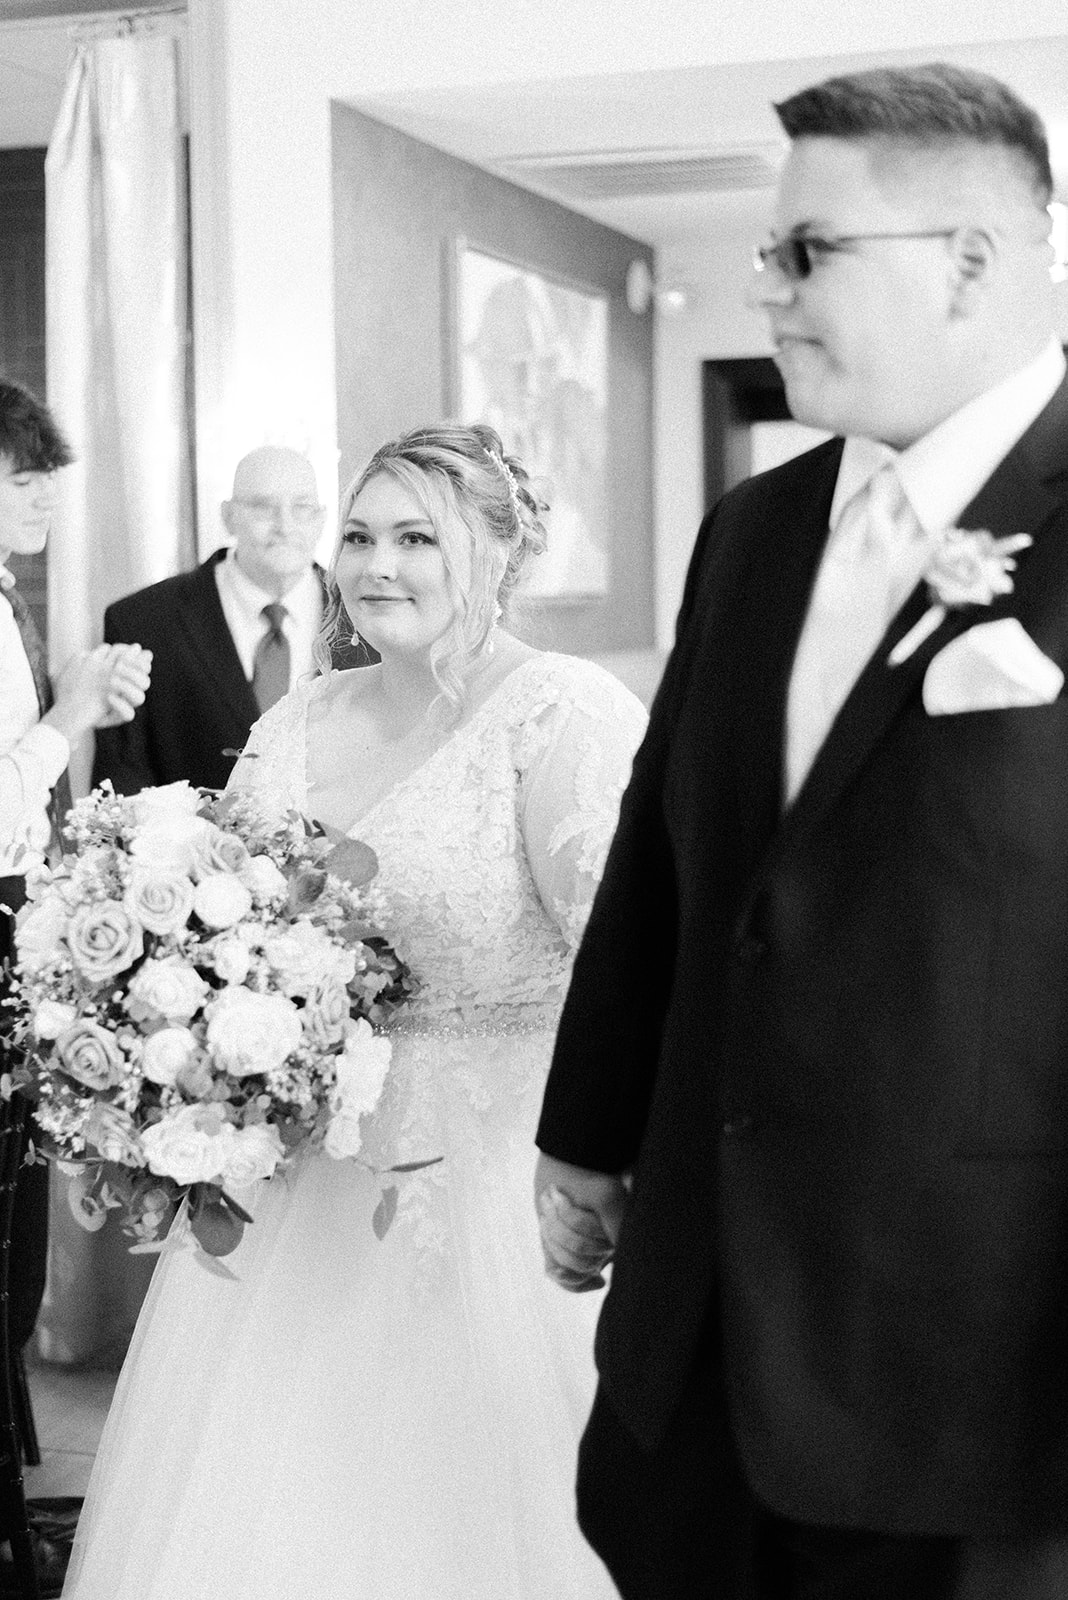 Pennsylvania wedding photographer captures bride and groom entering reception